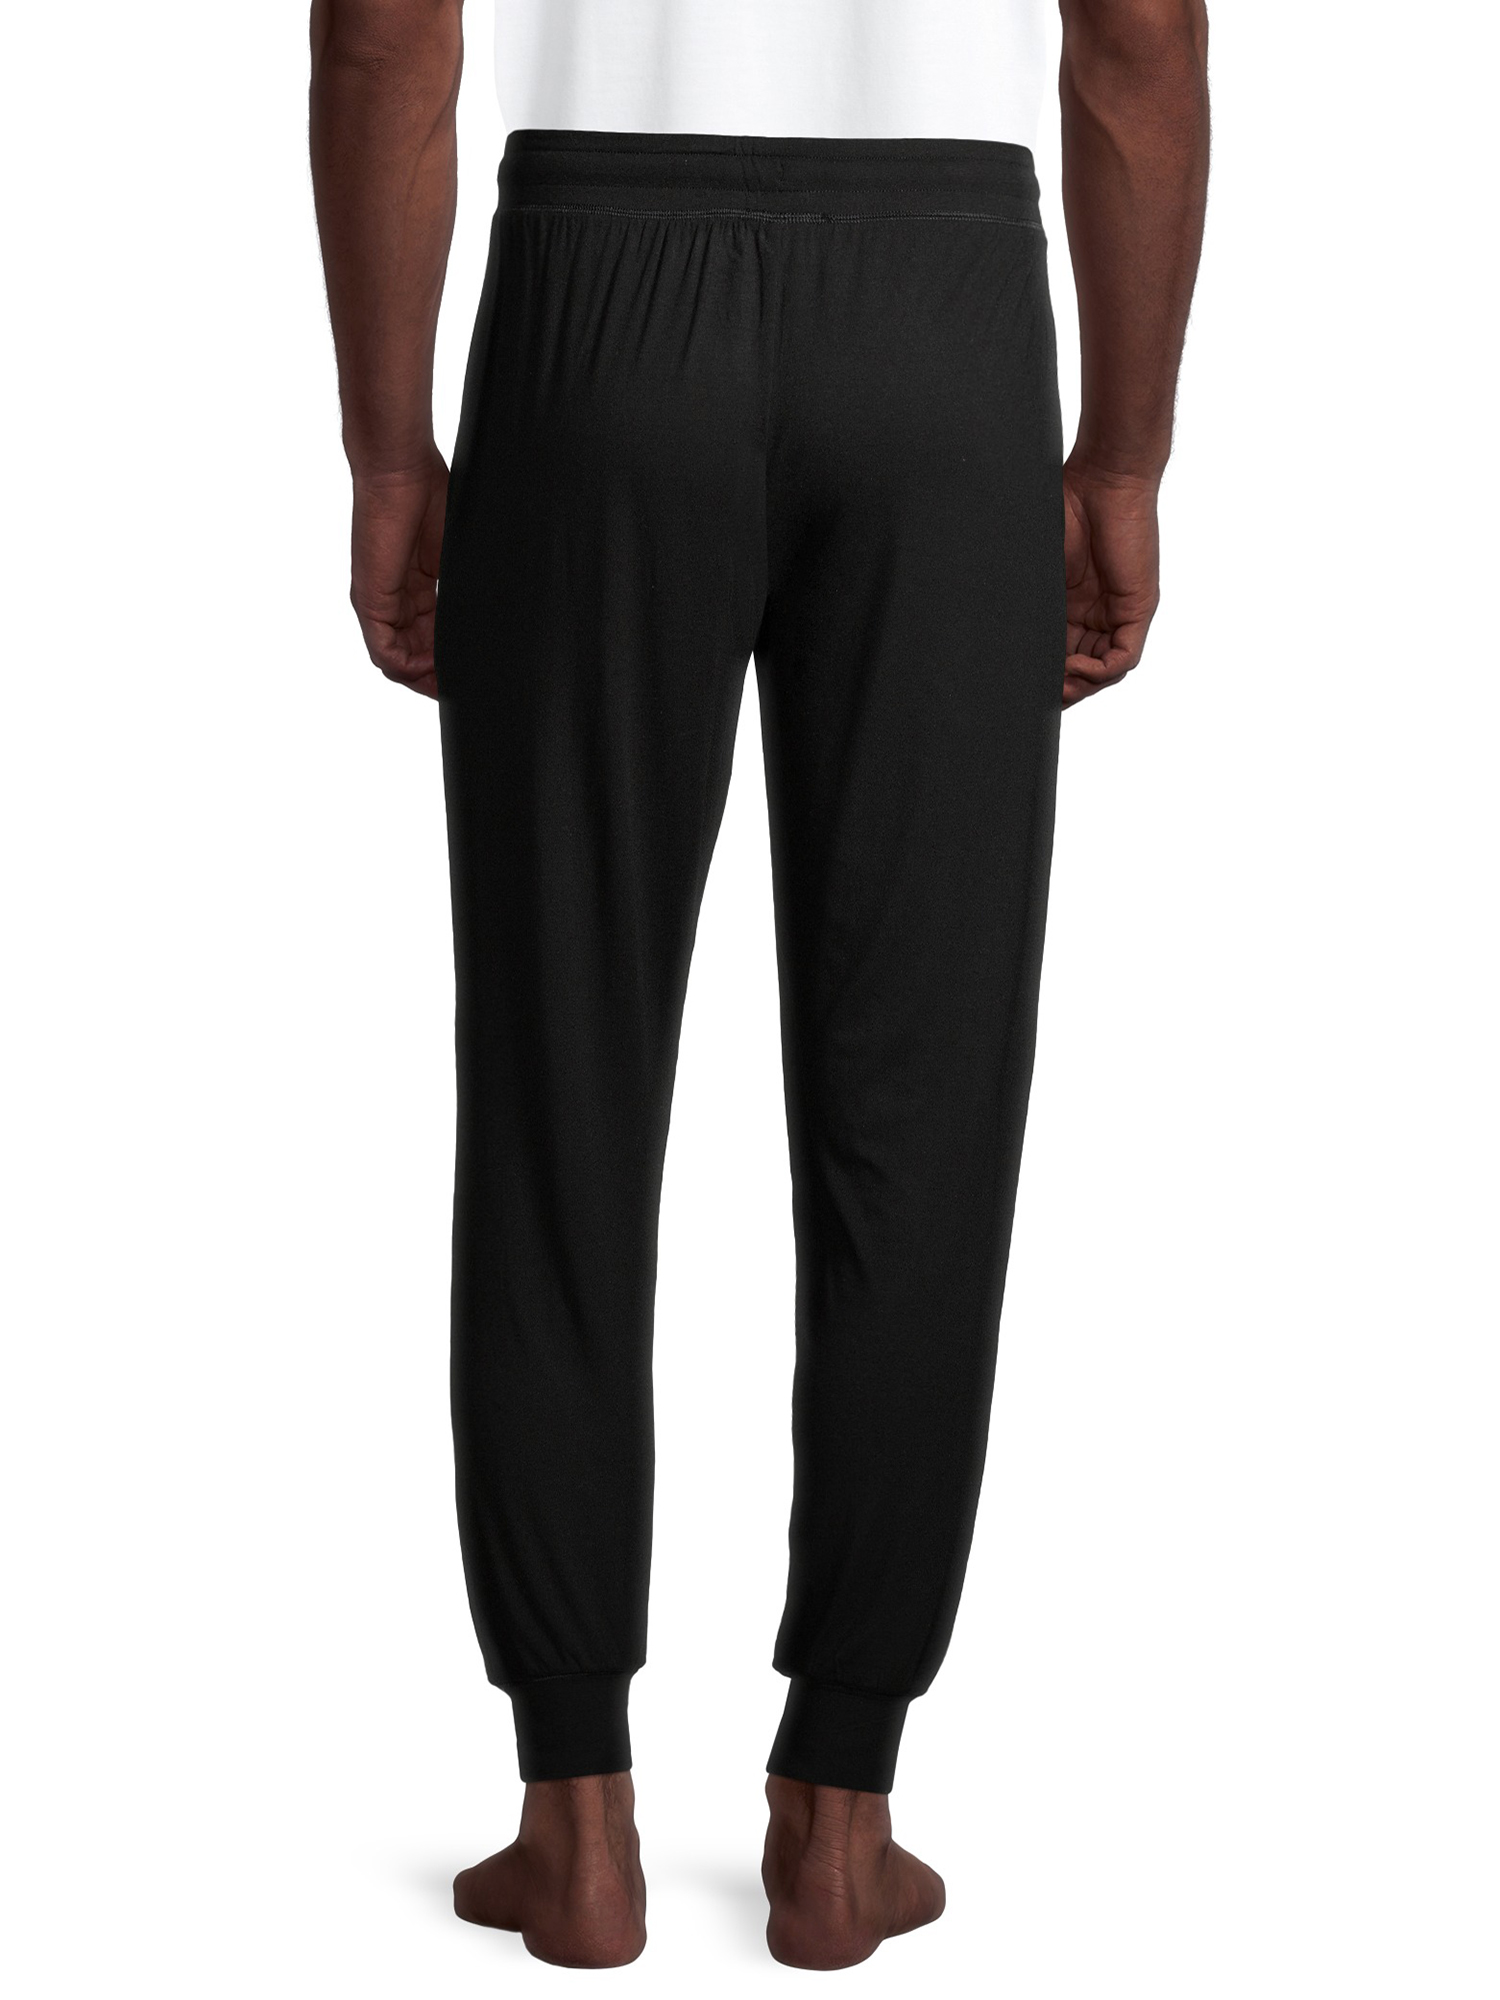 Hanes Men's Ultrasoft Modal Stretch Cozy Pajama Joggers - Walmart.com